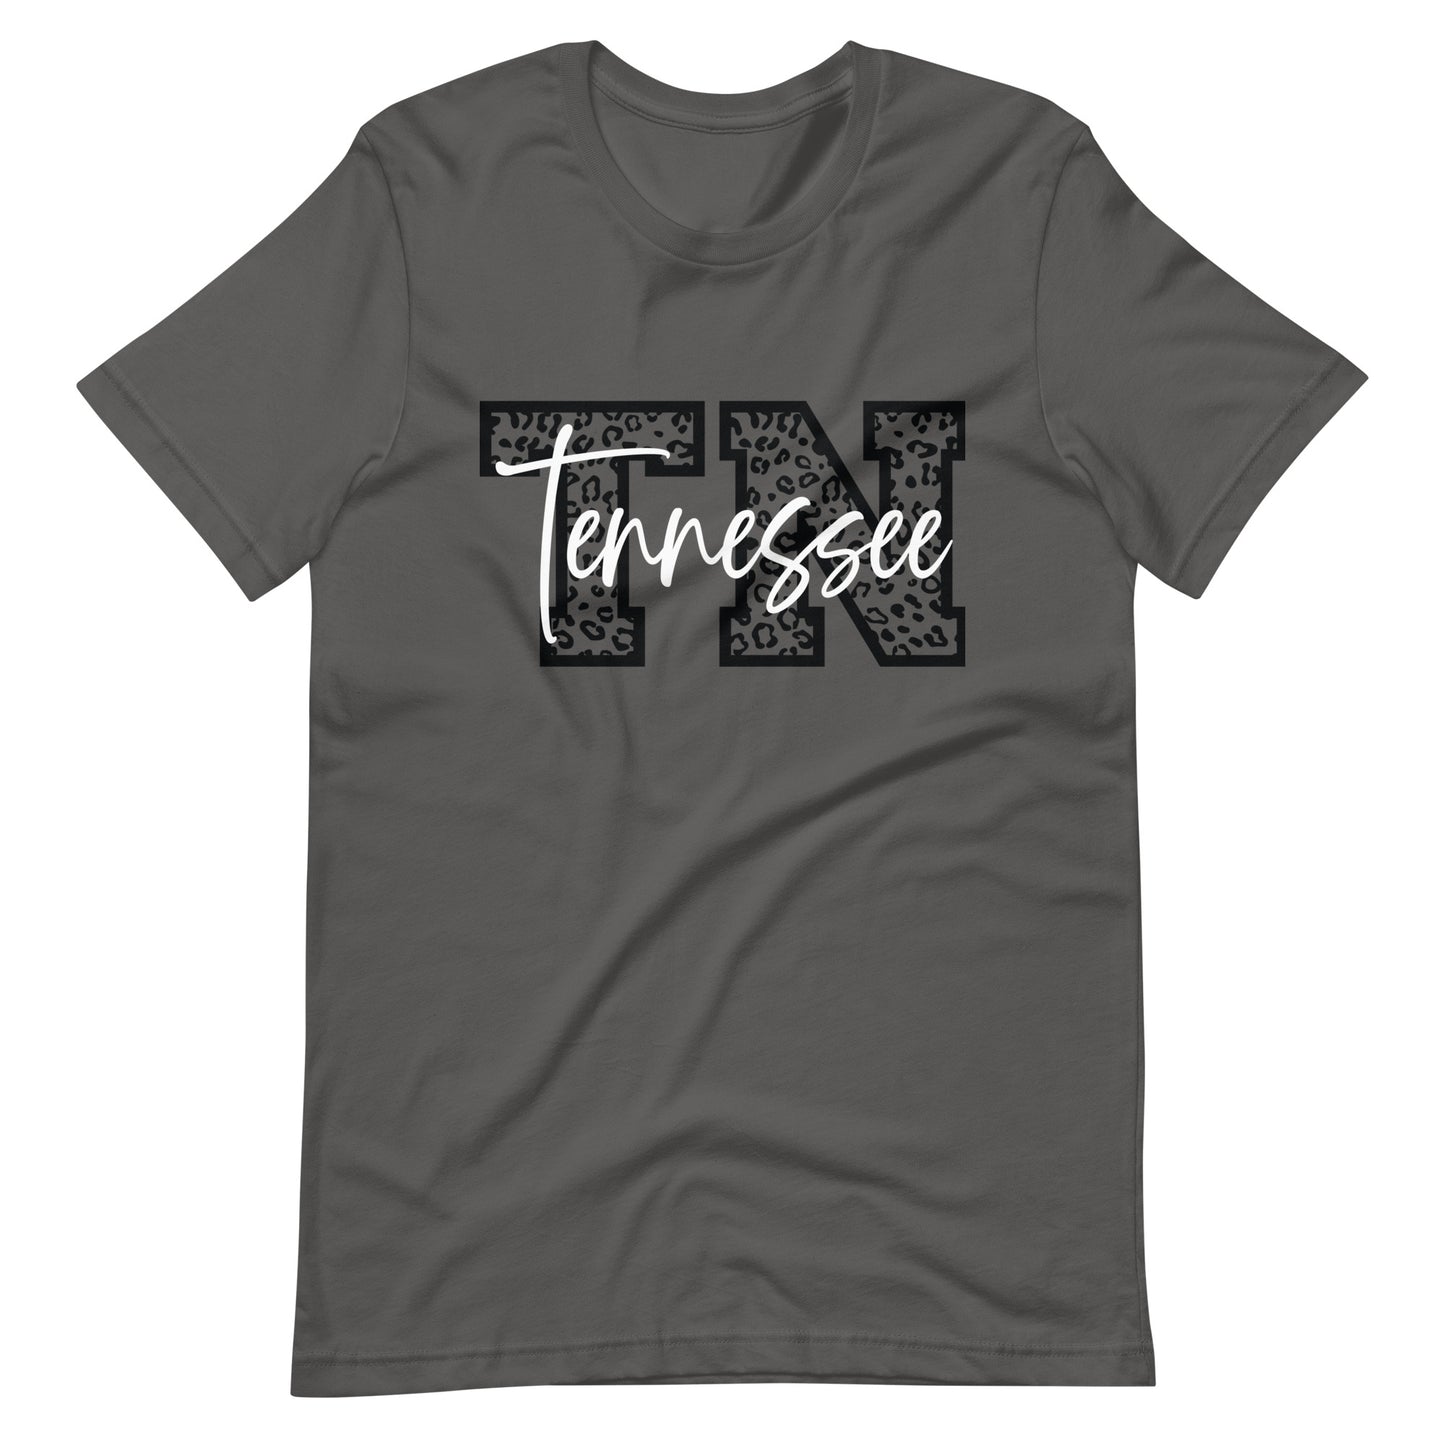 Leopard Tennessee t-shirt